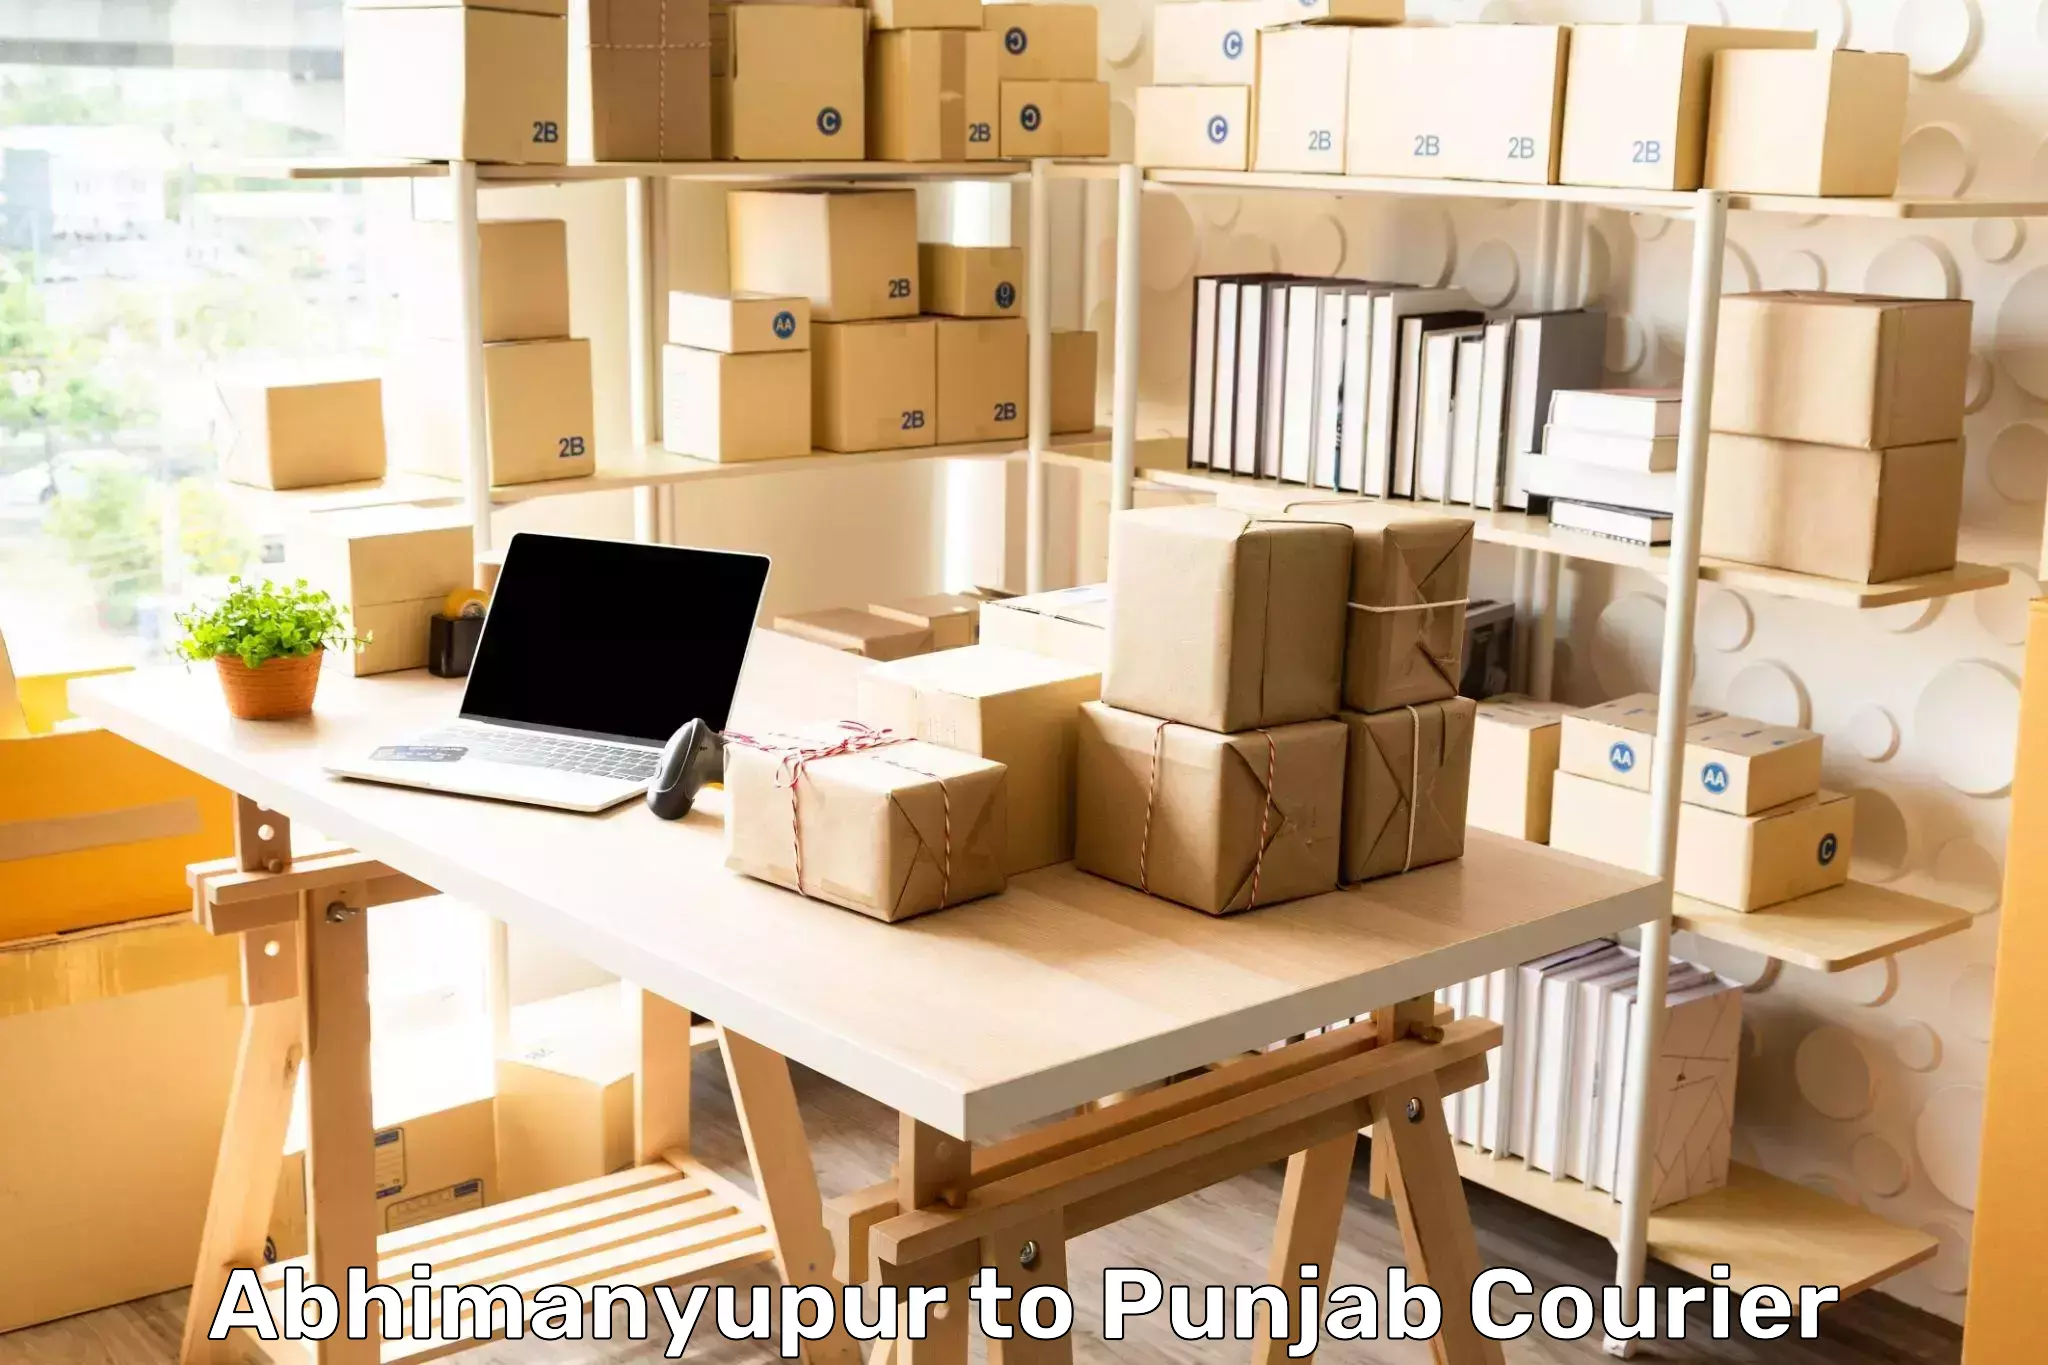 Nationwide shipping coverage Abhimanyupur to Punjab